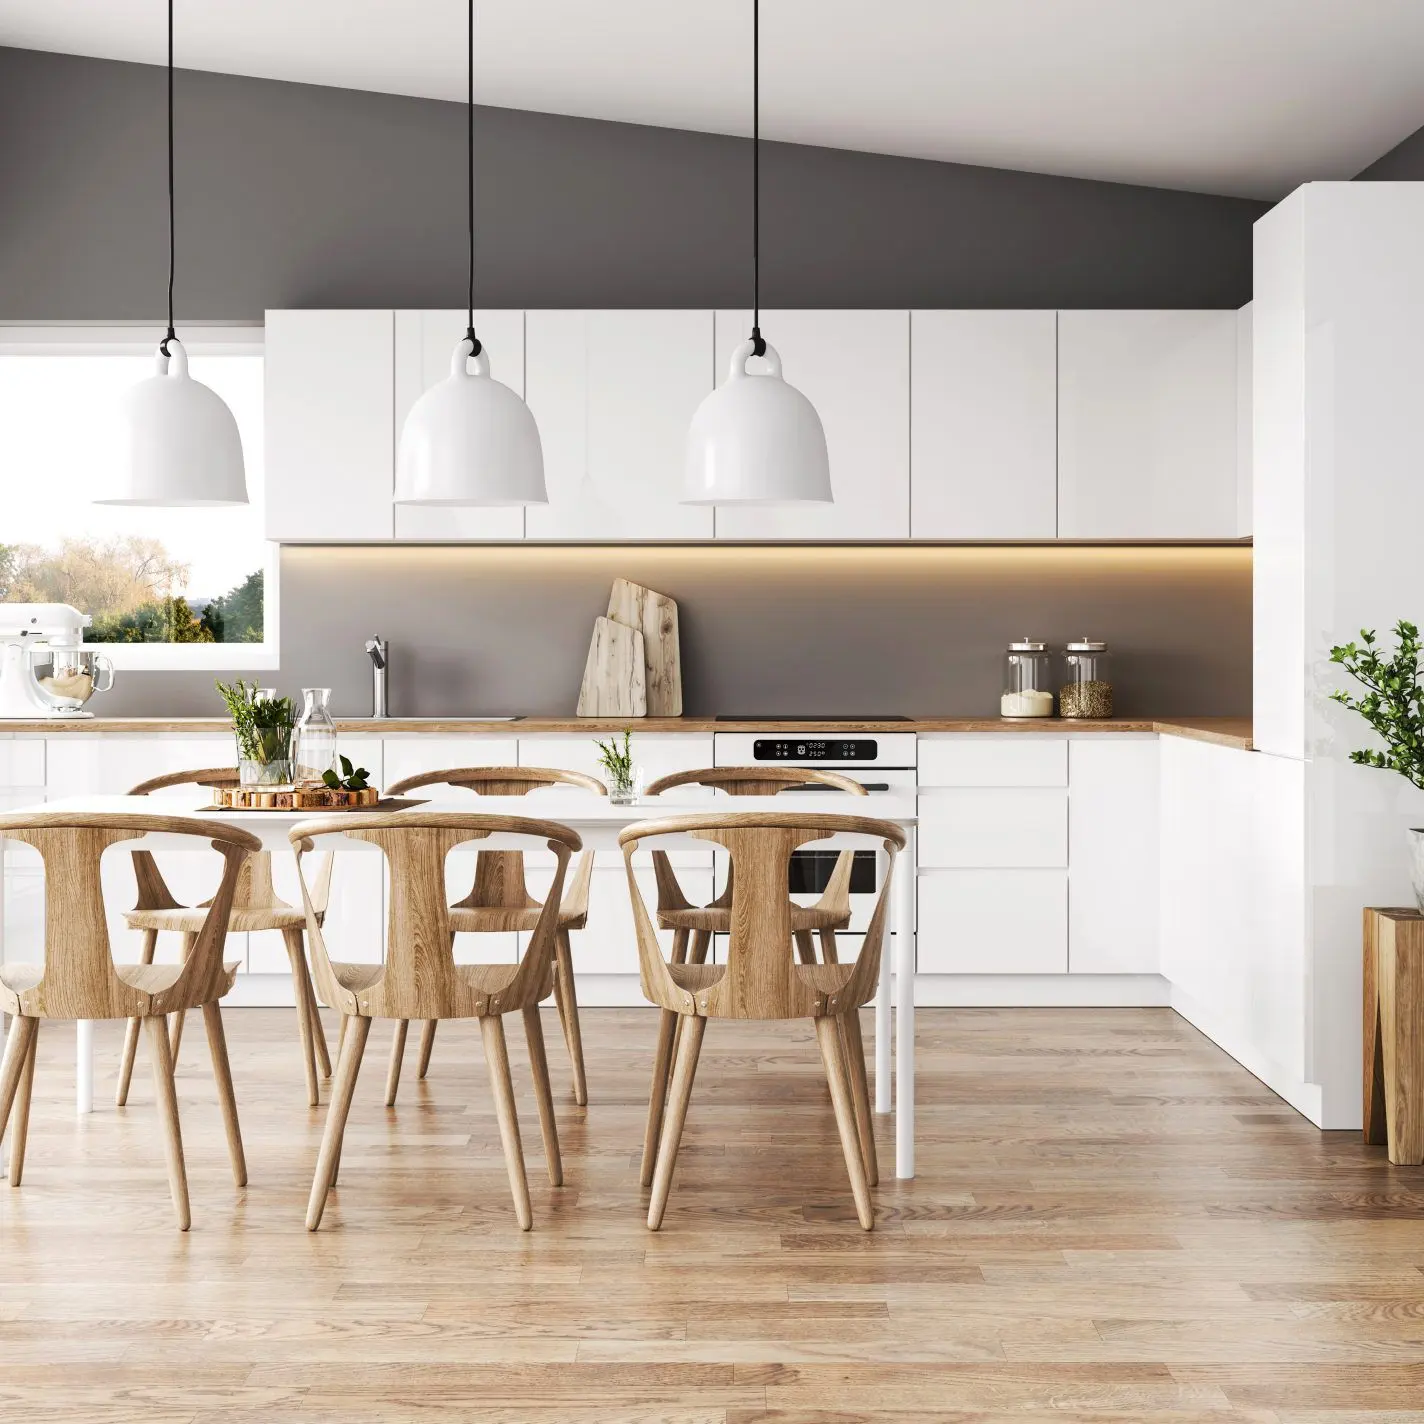 BFP High Quality Minimalist style Kitchen Wall Cabinets Complete Modern Kitchen Designs with Matt Finish